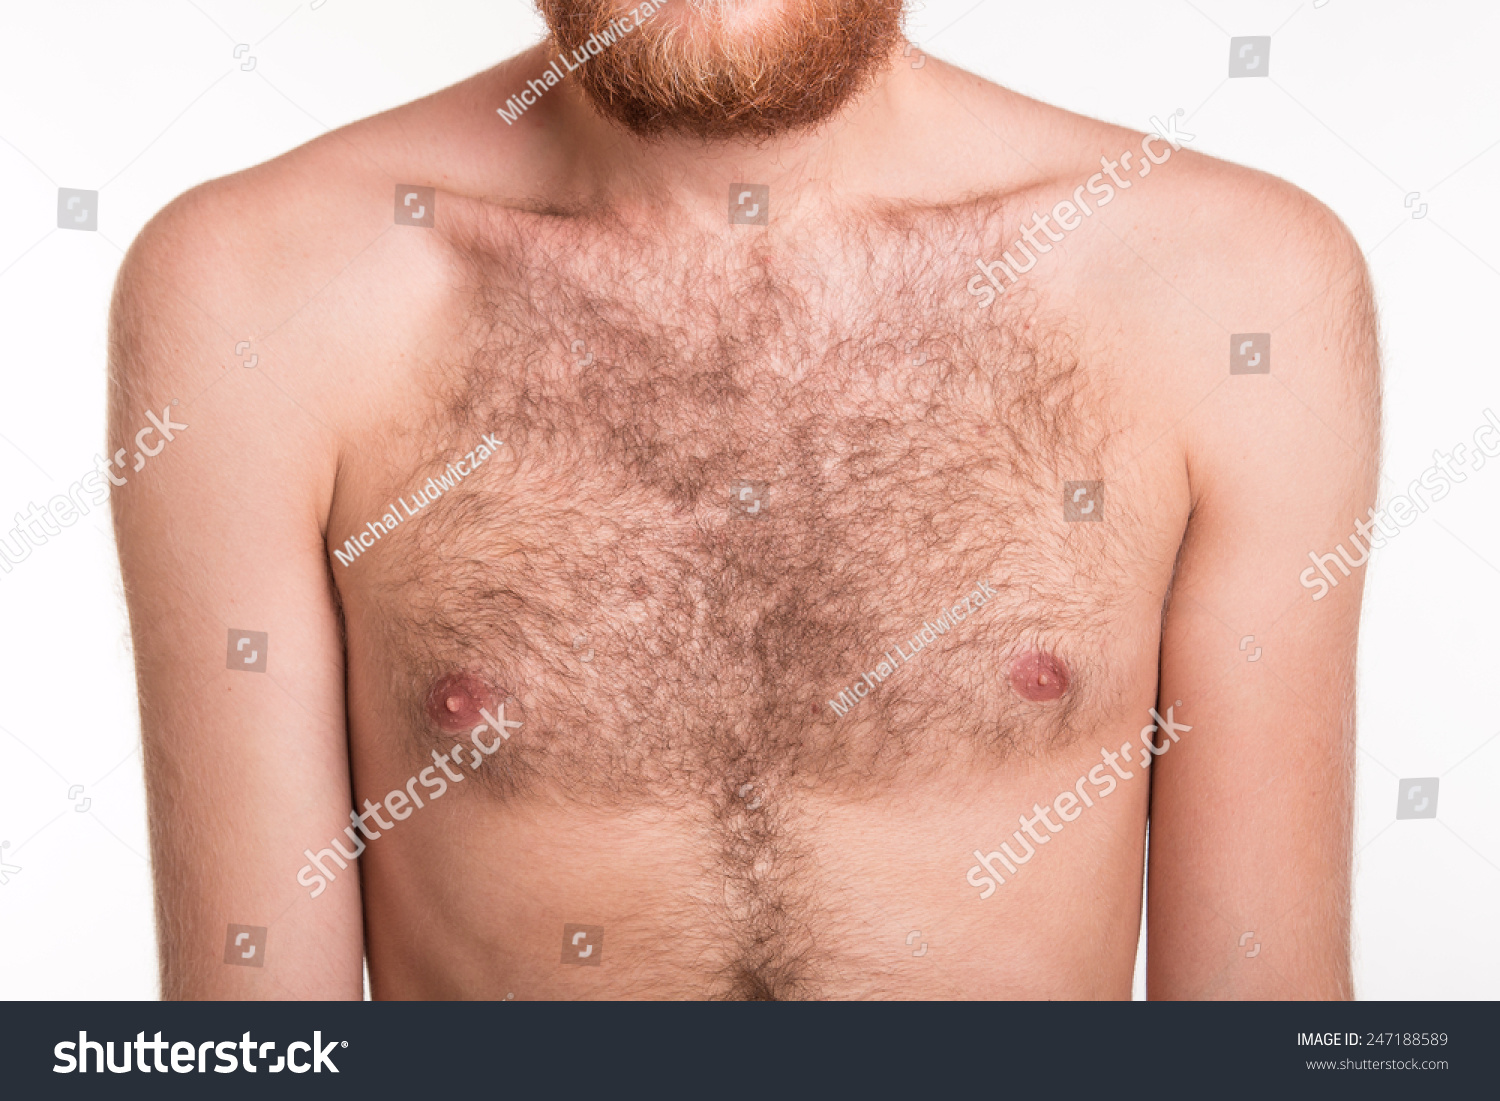 волосатость мужчин на груди фото 58